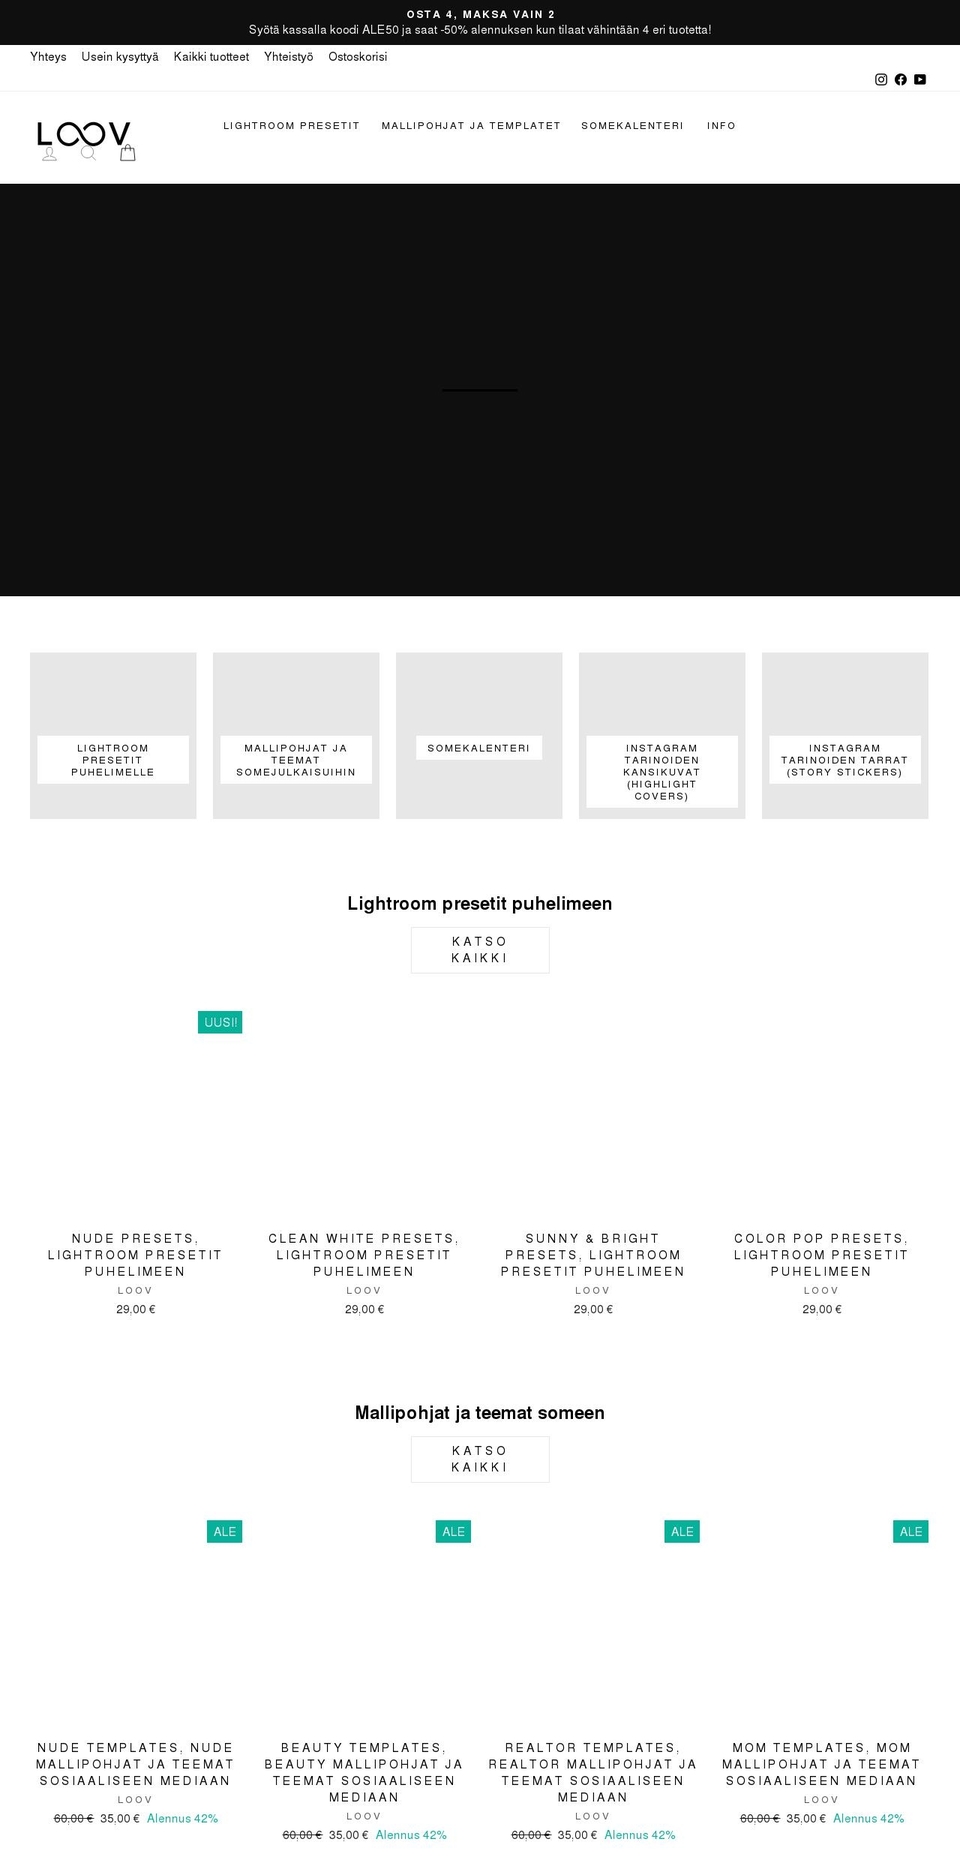 loov.fi shopify website screenshot